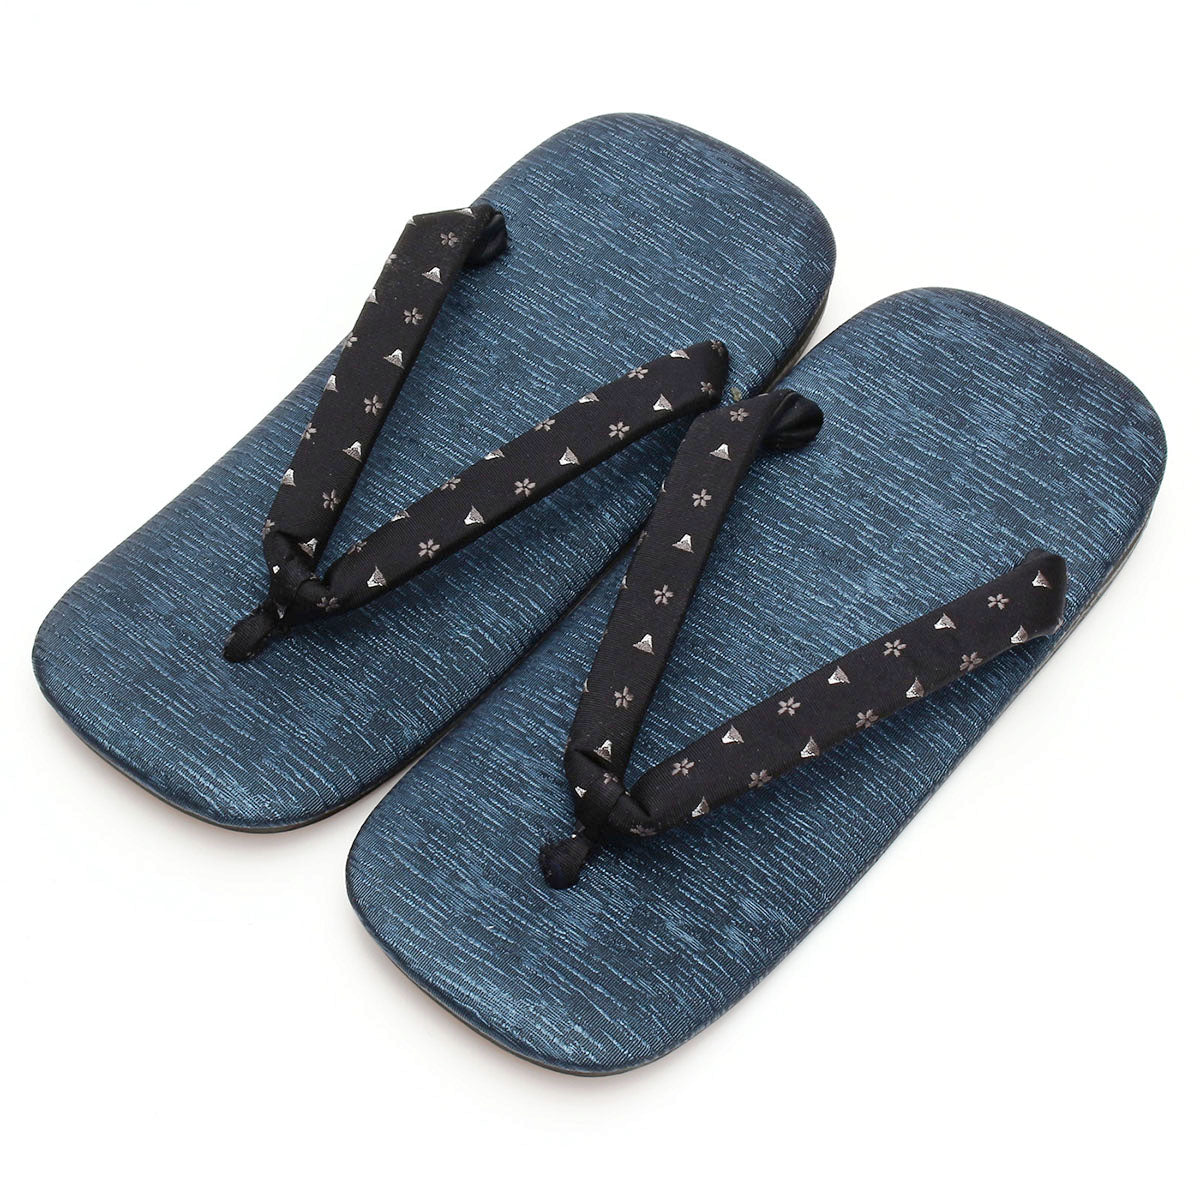 Men's Japanese Leather Soled Geta & Zori Sandals flip-flops Handmade with Silk Thongs -18. HOKUSAI FORTUNA Tokyo